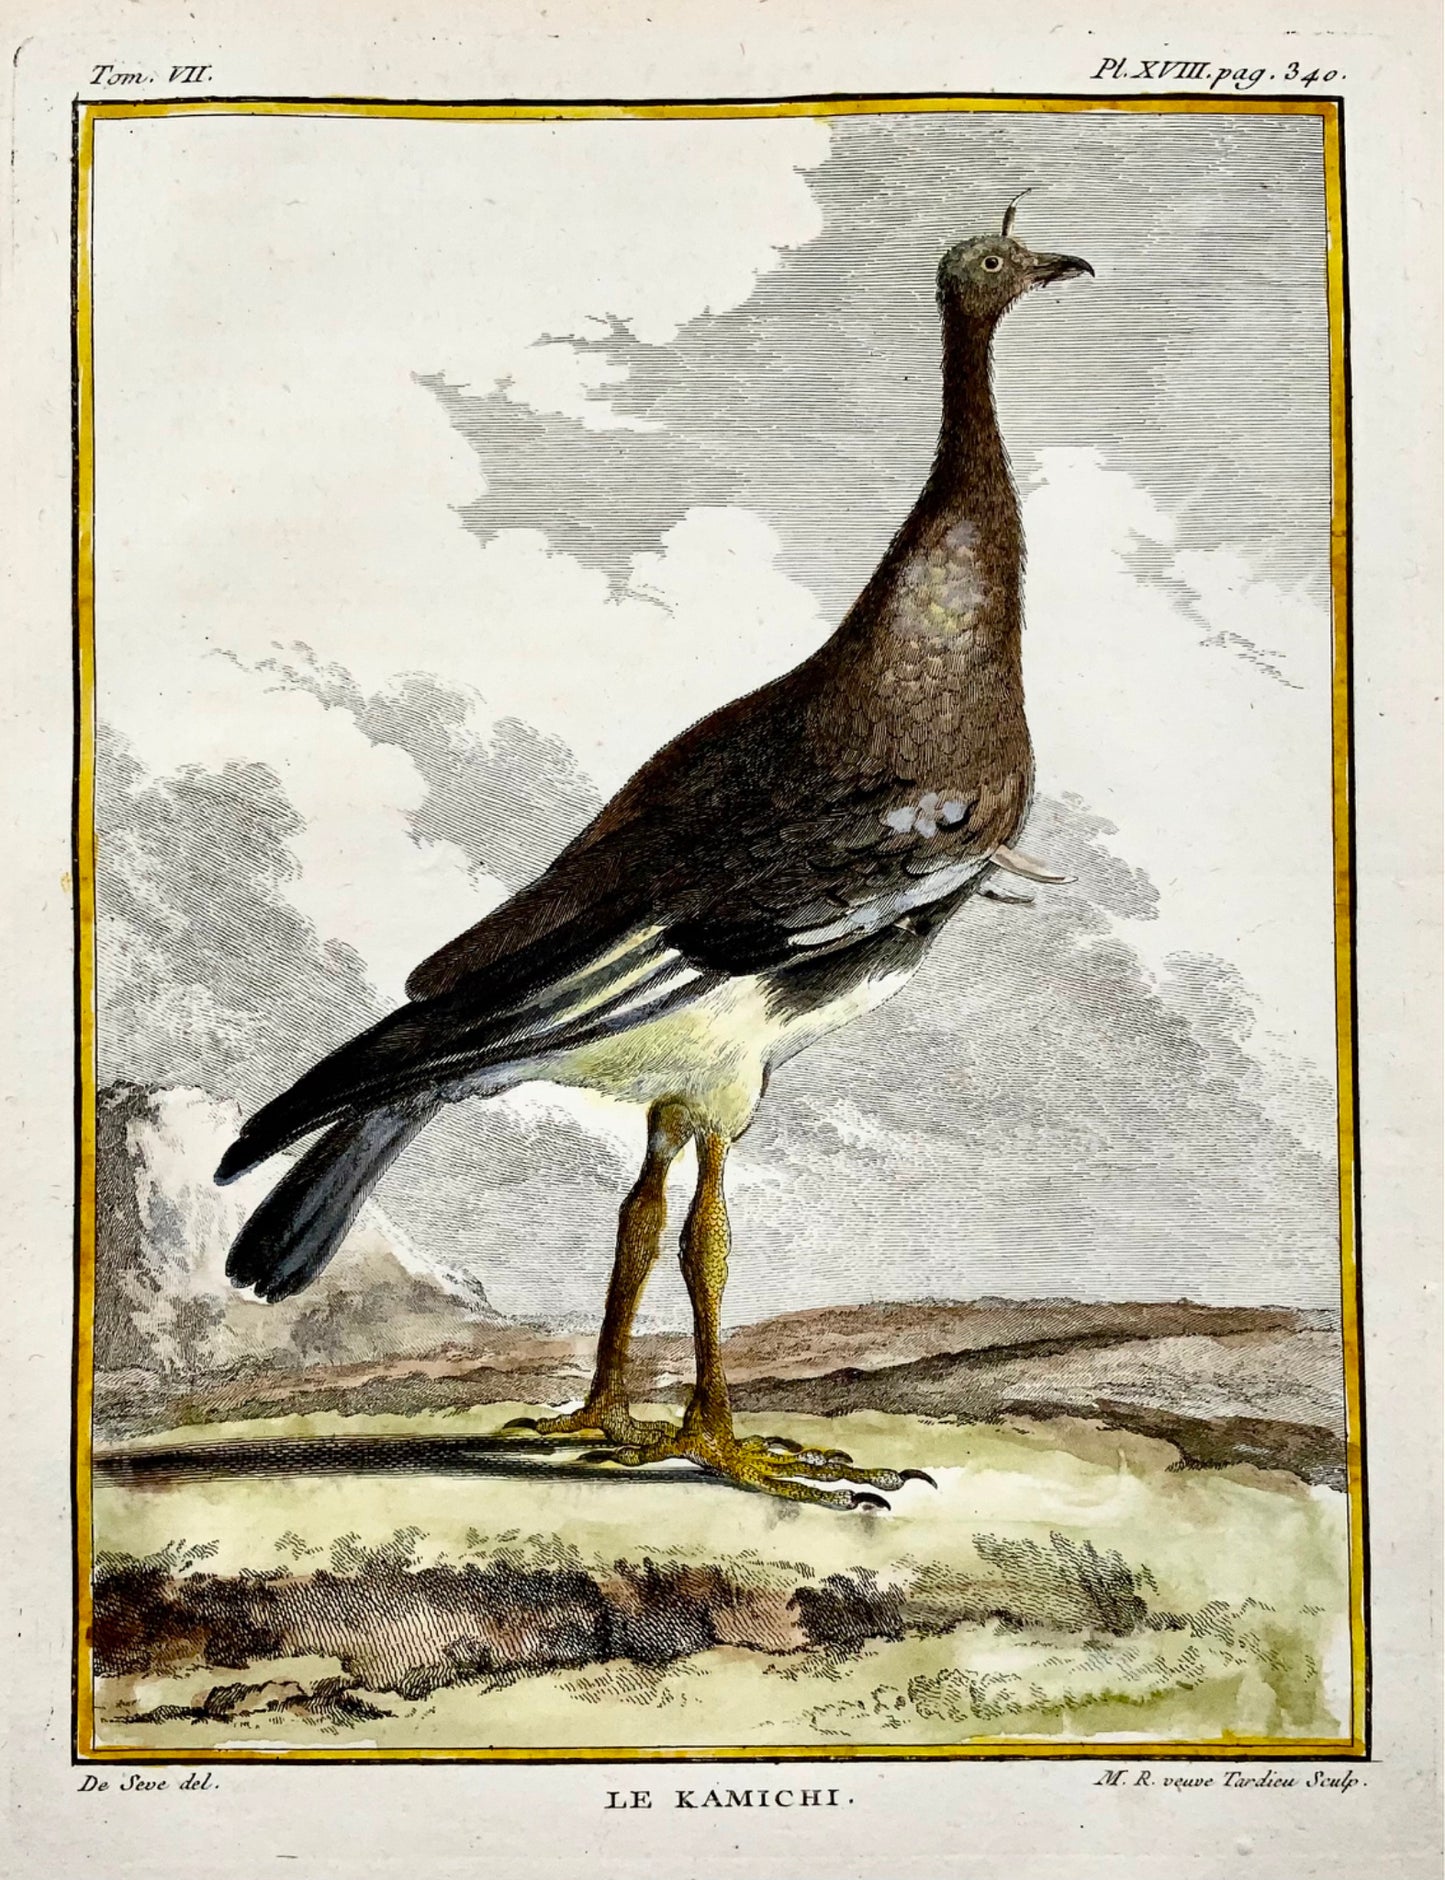 1779 de Seve - S’ern SCREAMER - Ornithology - 4to Large Edn engraving